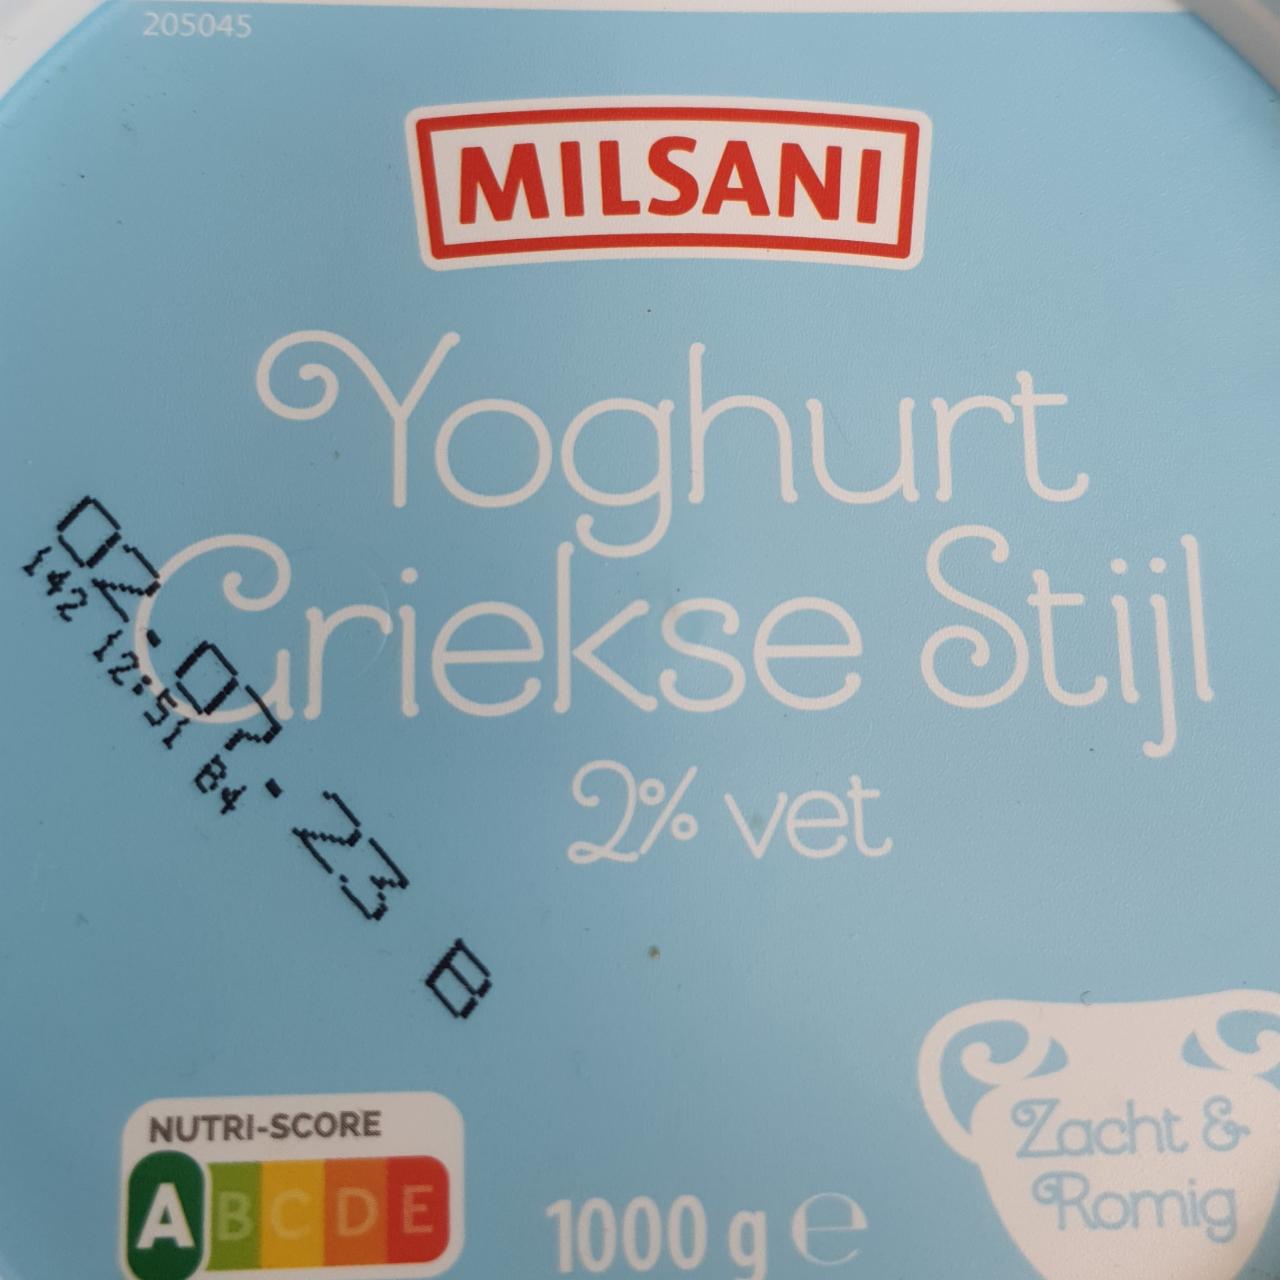 Fotografie - Yoghurt Griekse Stijl 2% vet Milsani